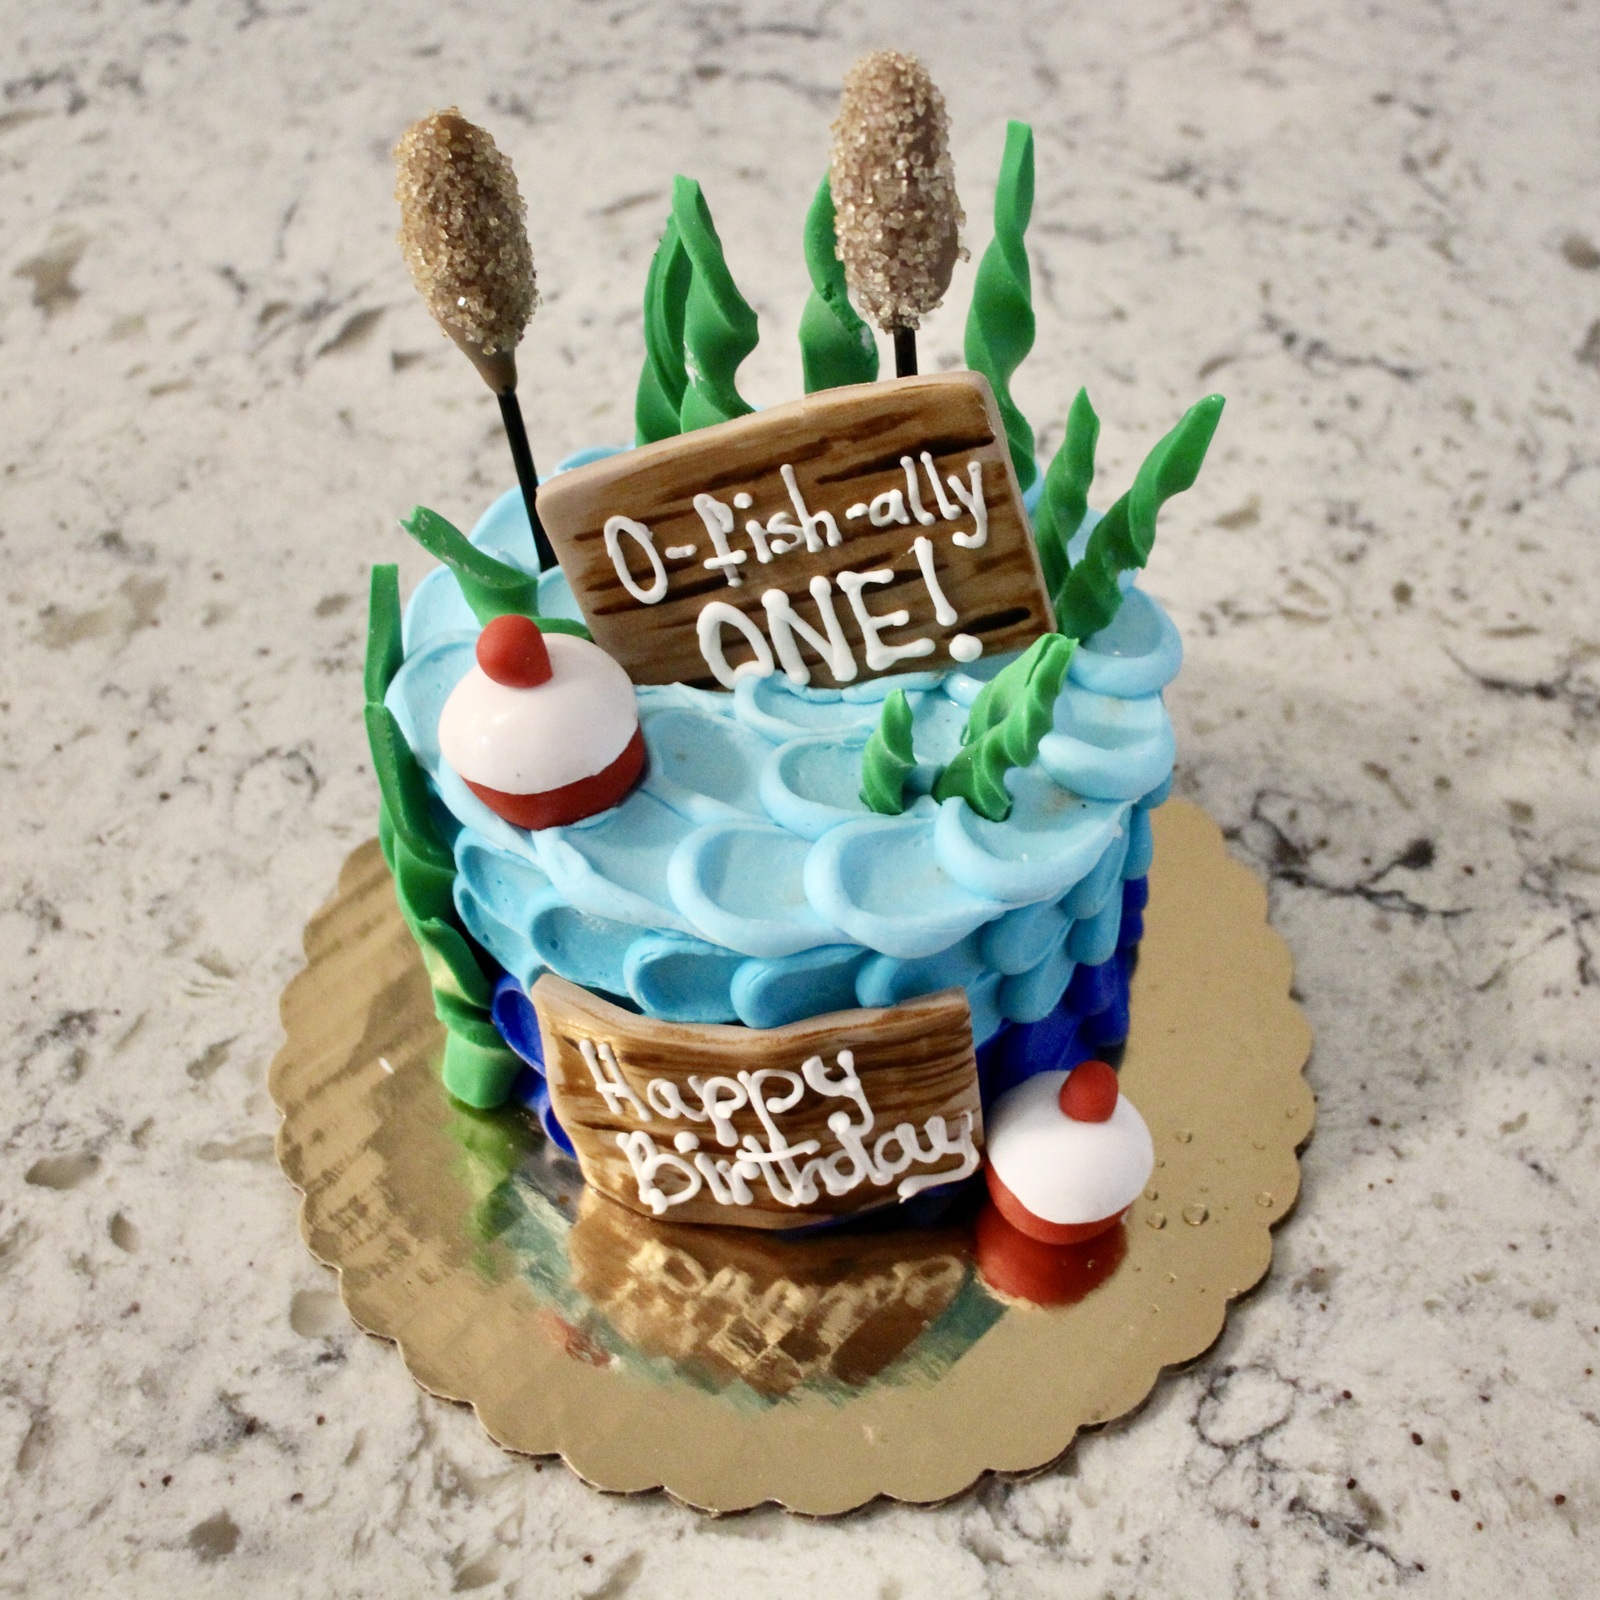 Smasher Cakes, 1st Birthdays & Gift Cakes